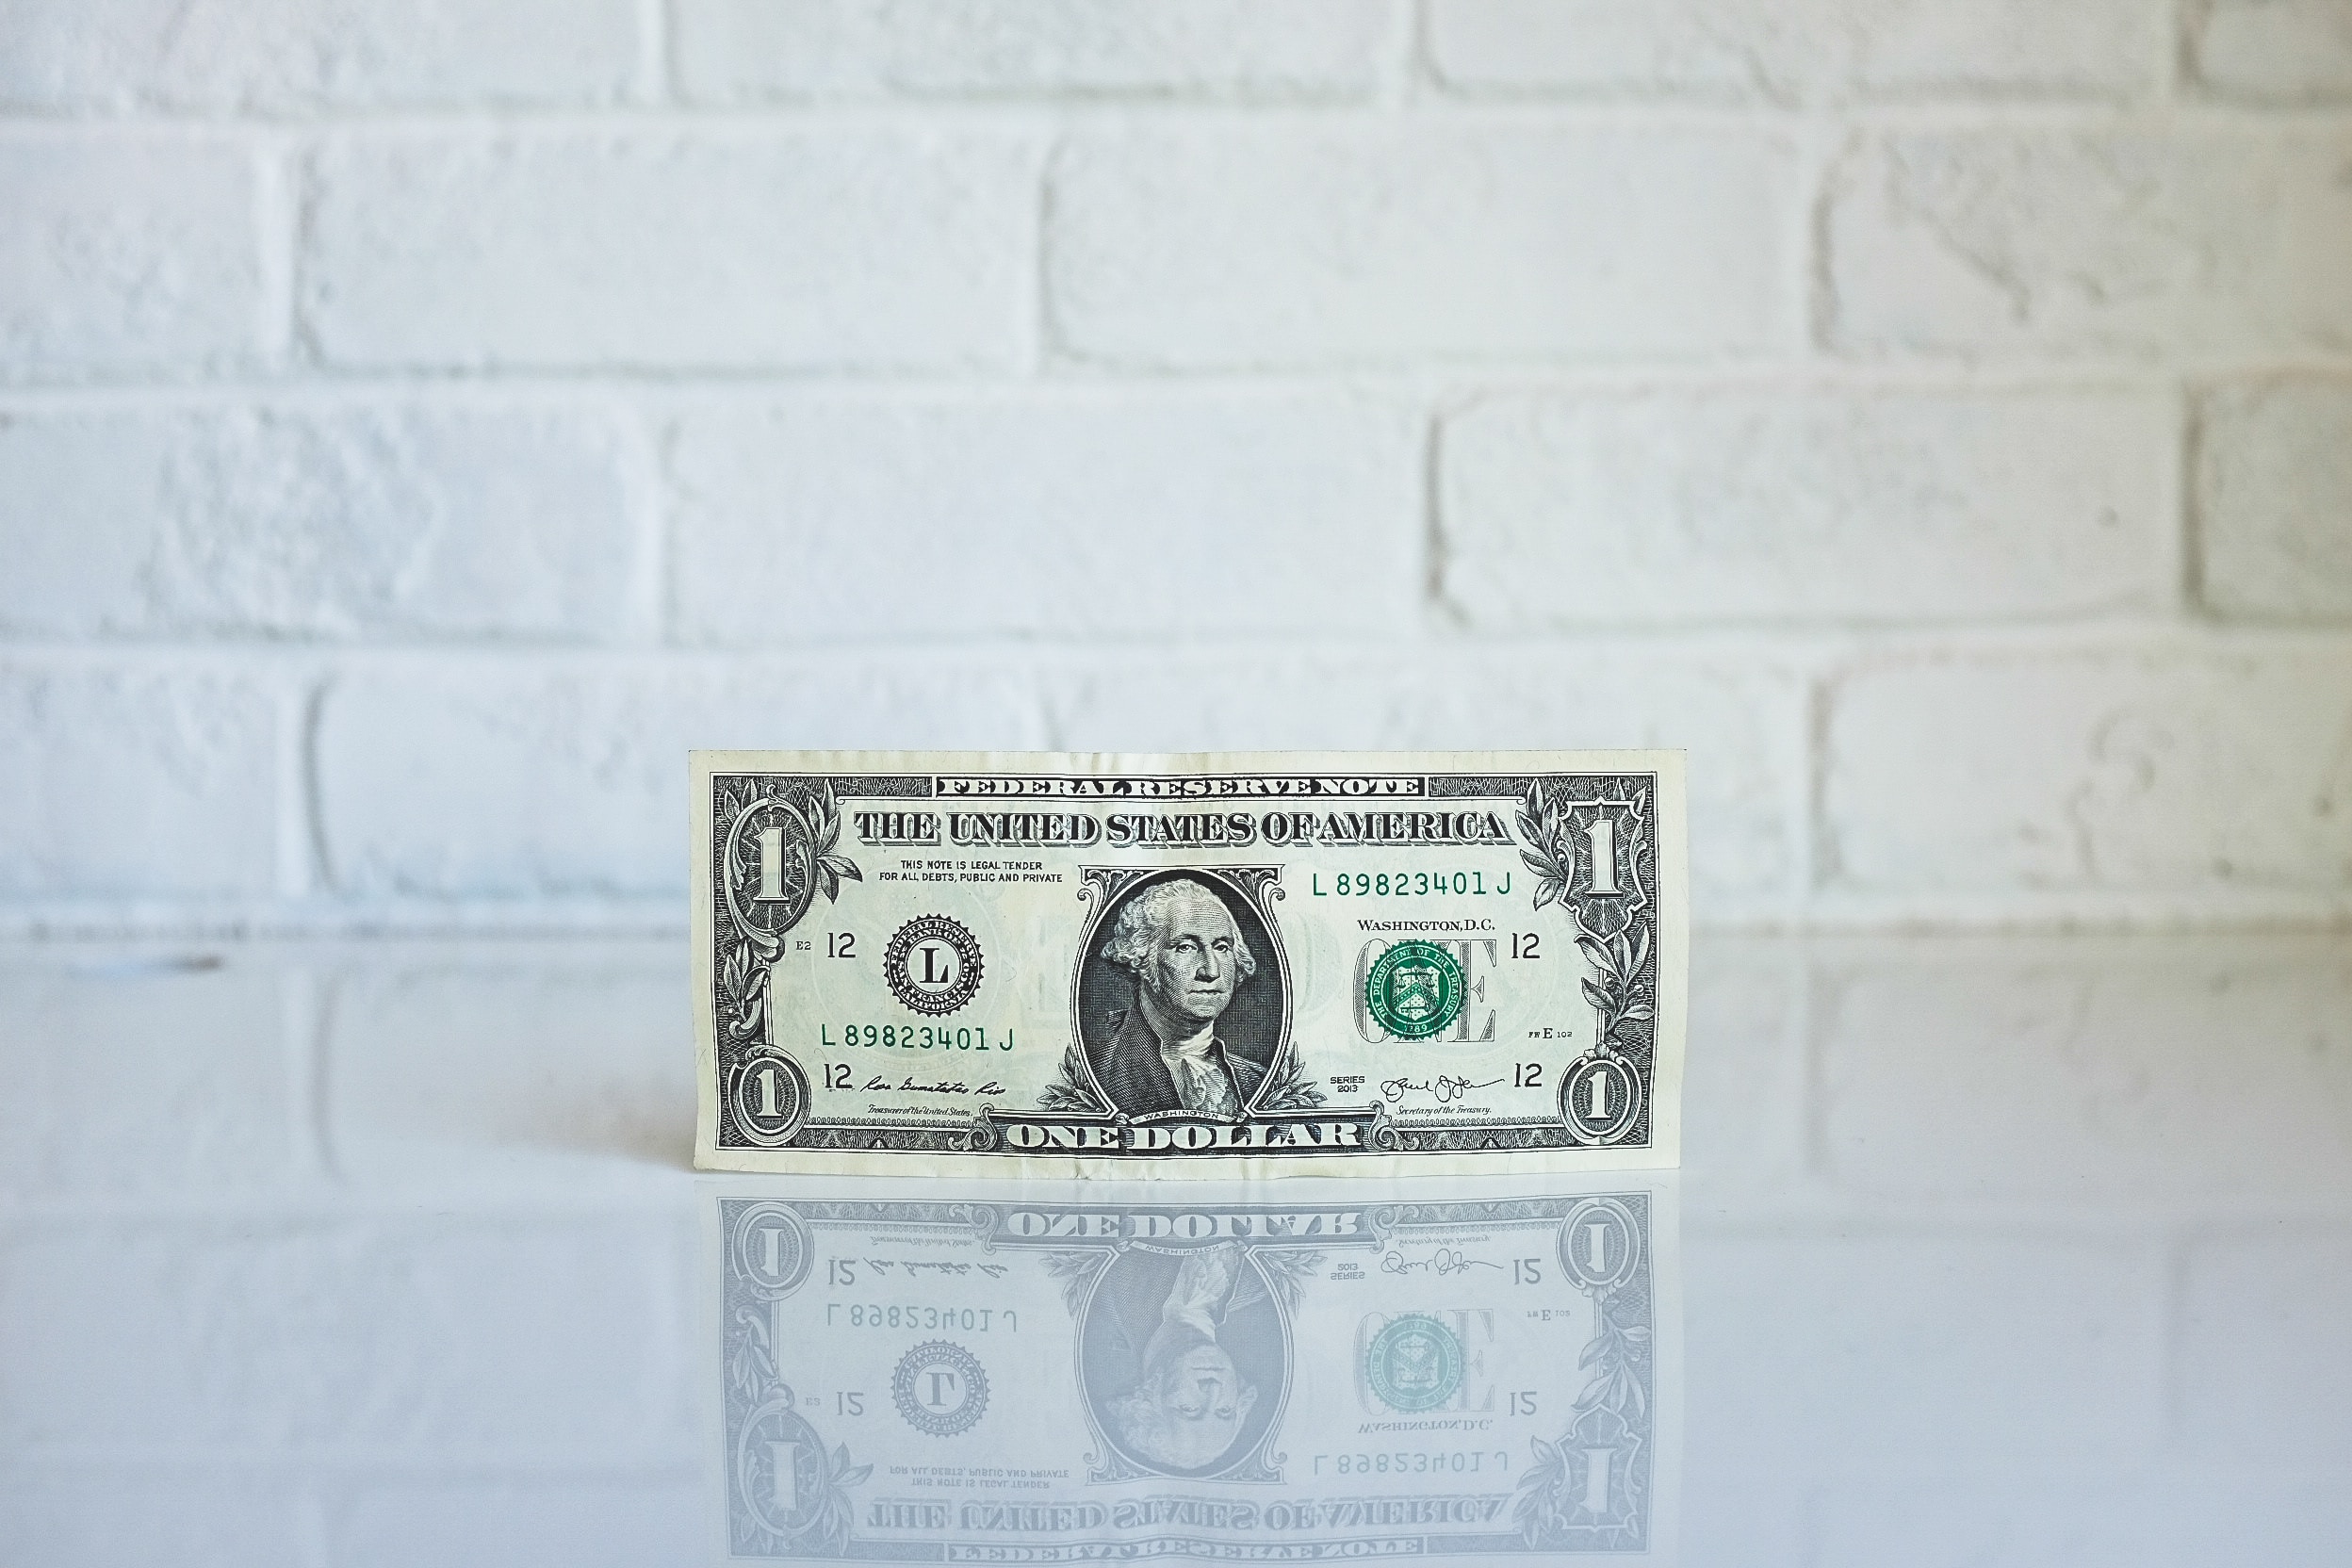 1 U.S. dollar banknote on white surface